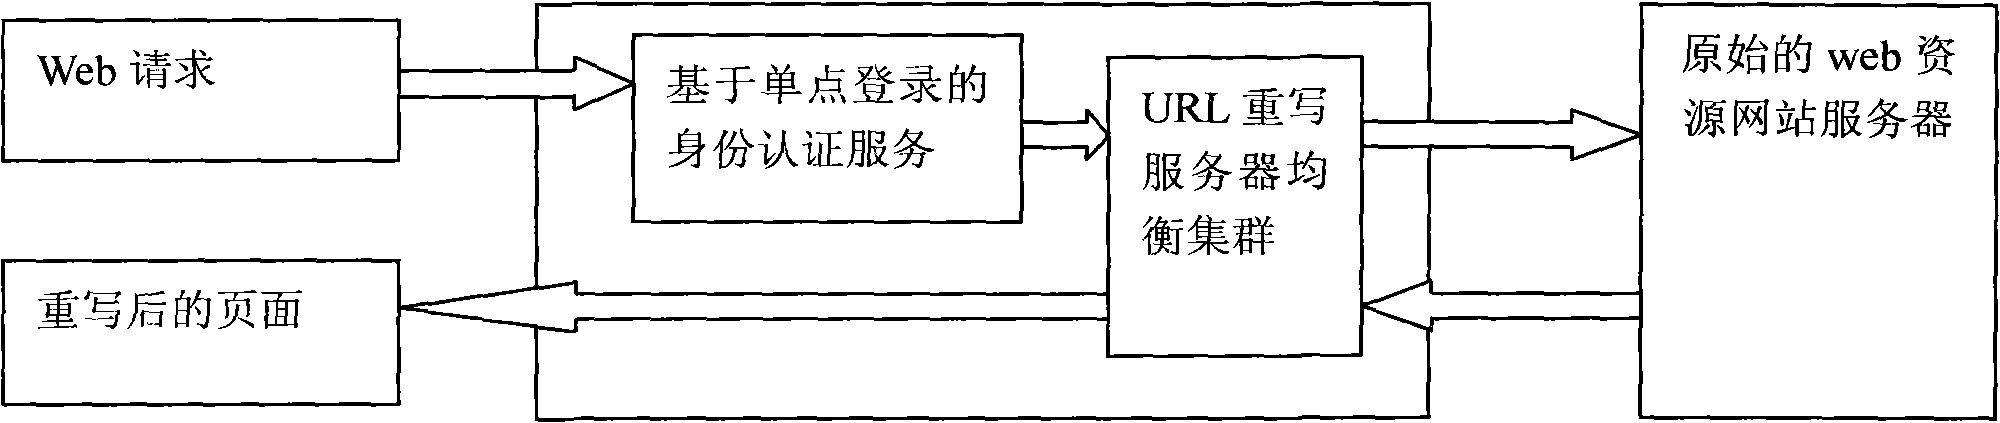 Proxy access method based on URL (Uniform Resource Locator) rewriting technique